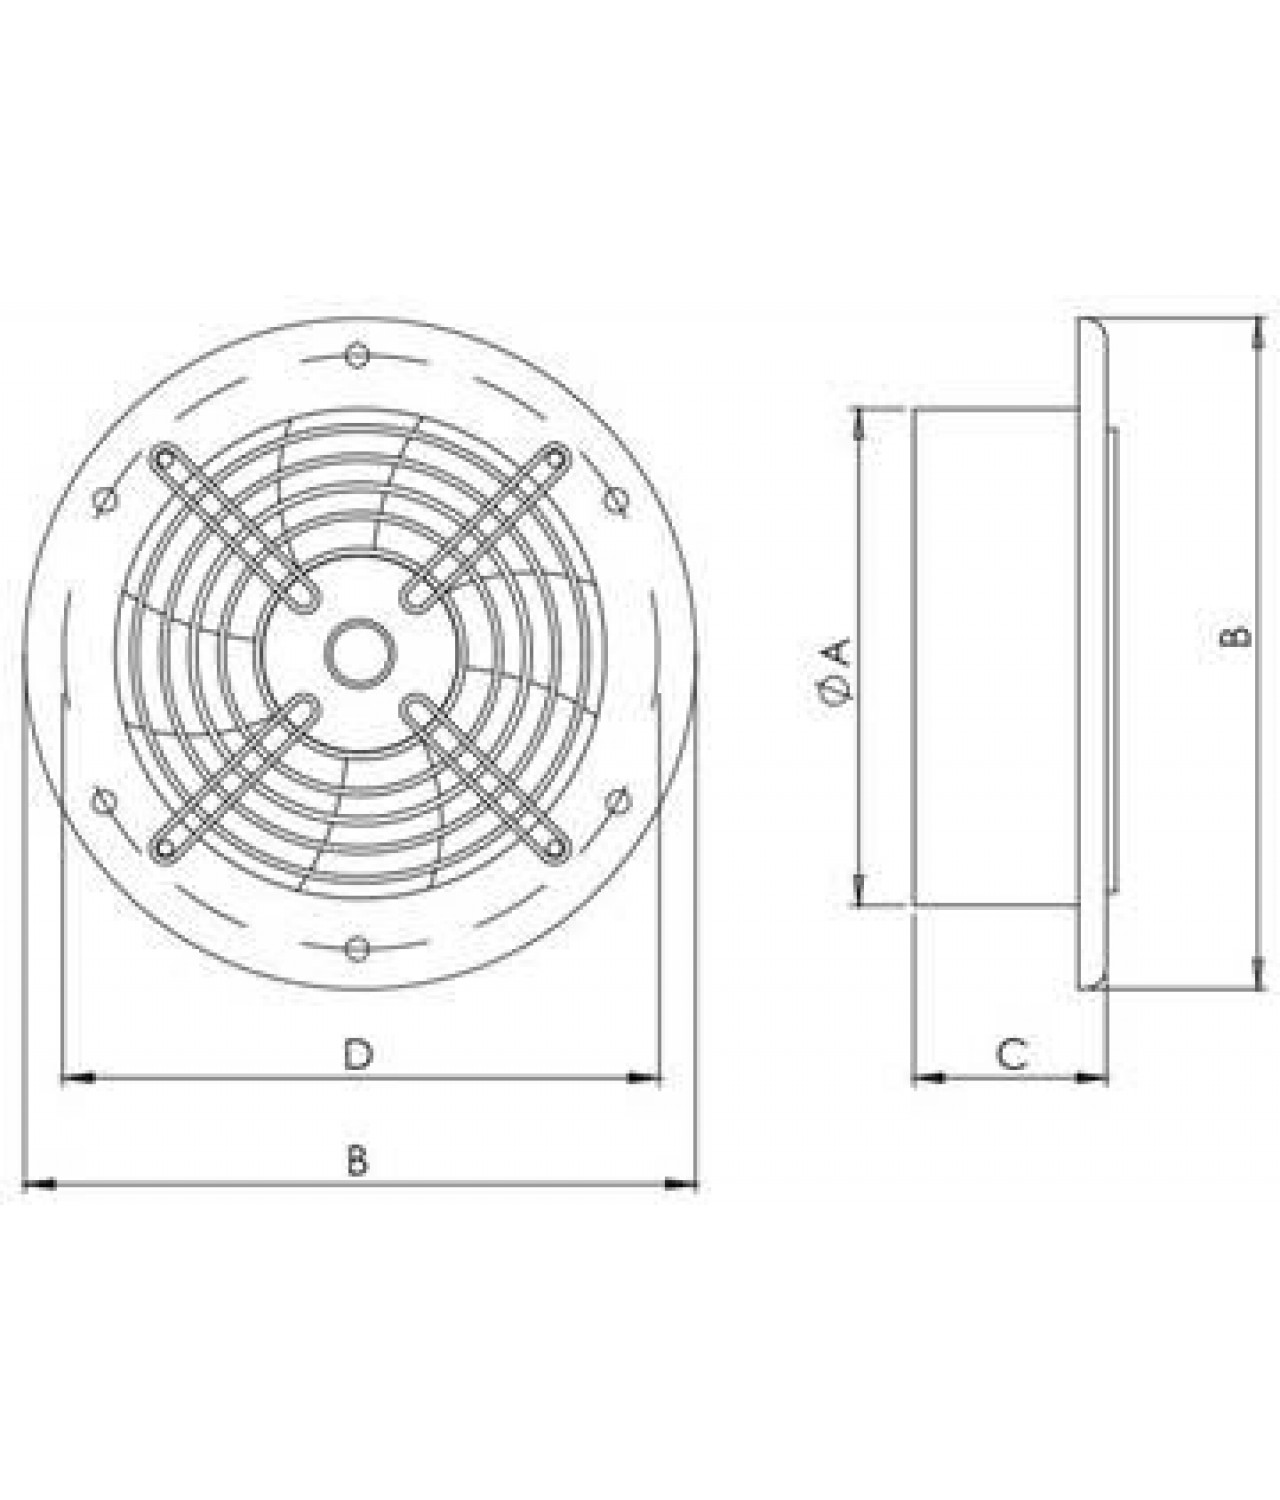 Axial fans Axia ROS ≤20695 m³/h - drawing